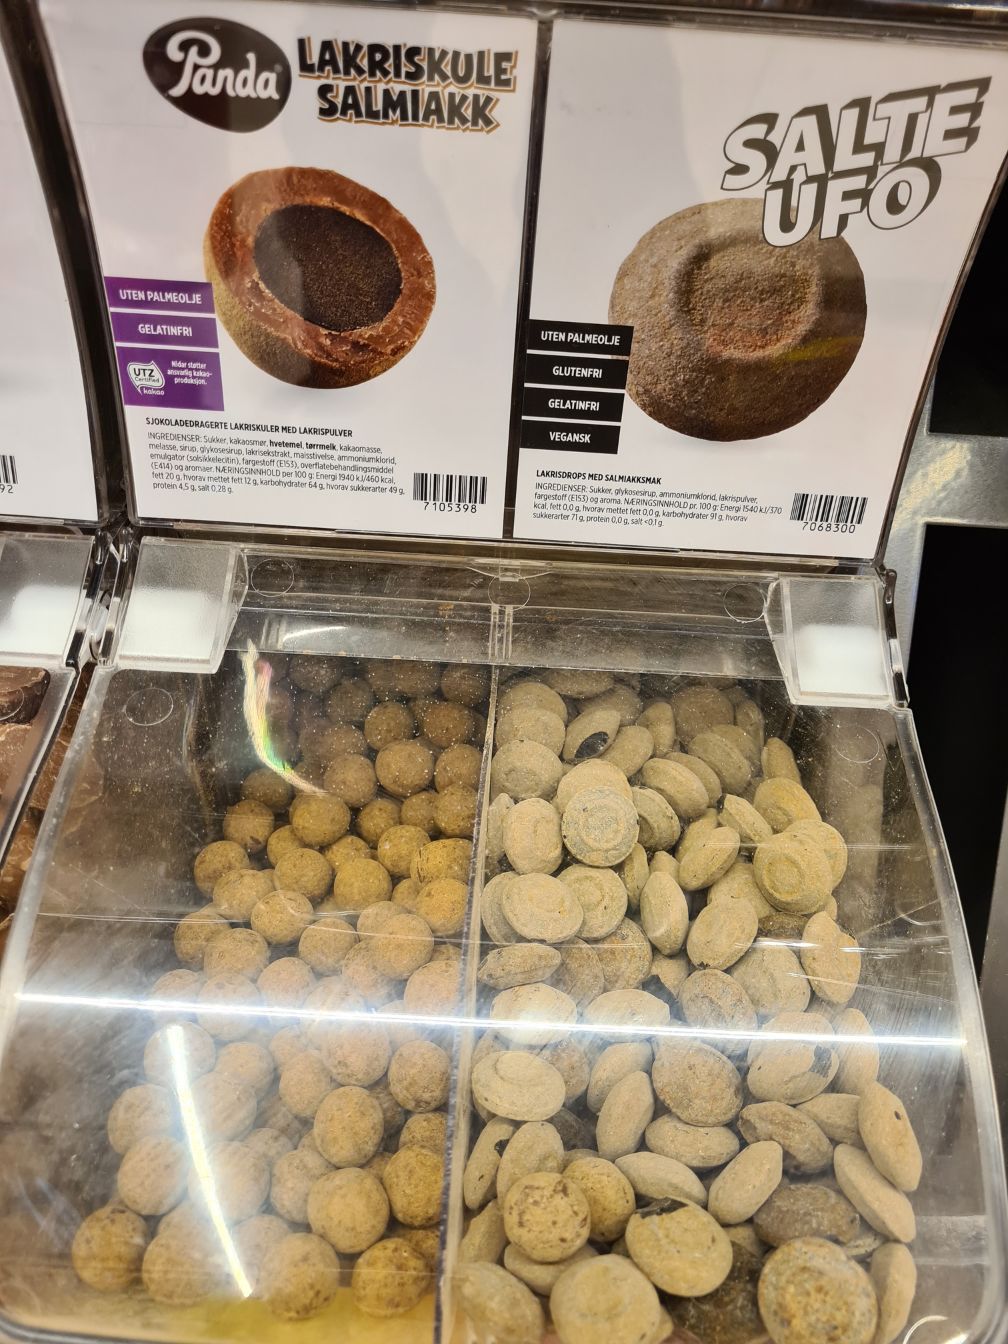 Salte UFO in a Norwegian supermarket. Photo: Daniel Albert.